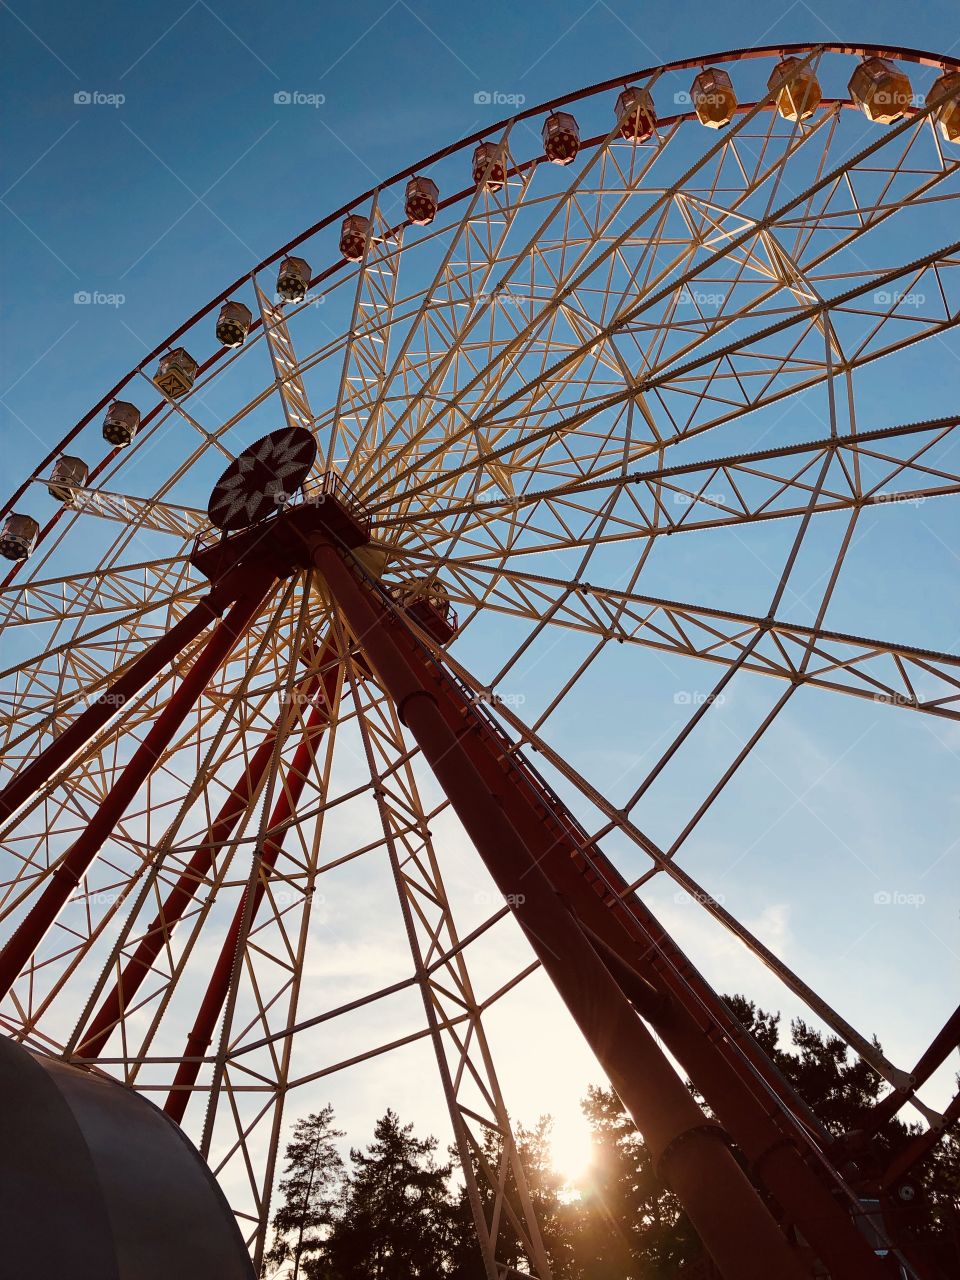 The highest Ferris wheel in Europe! 